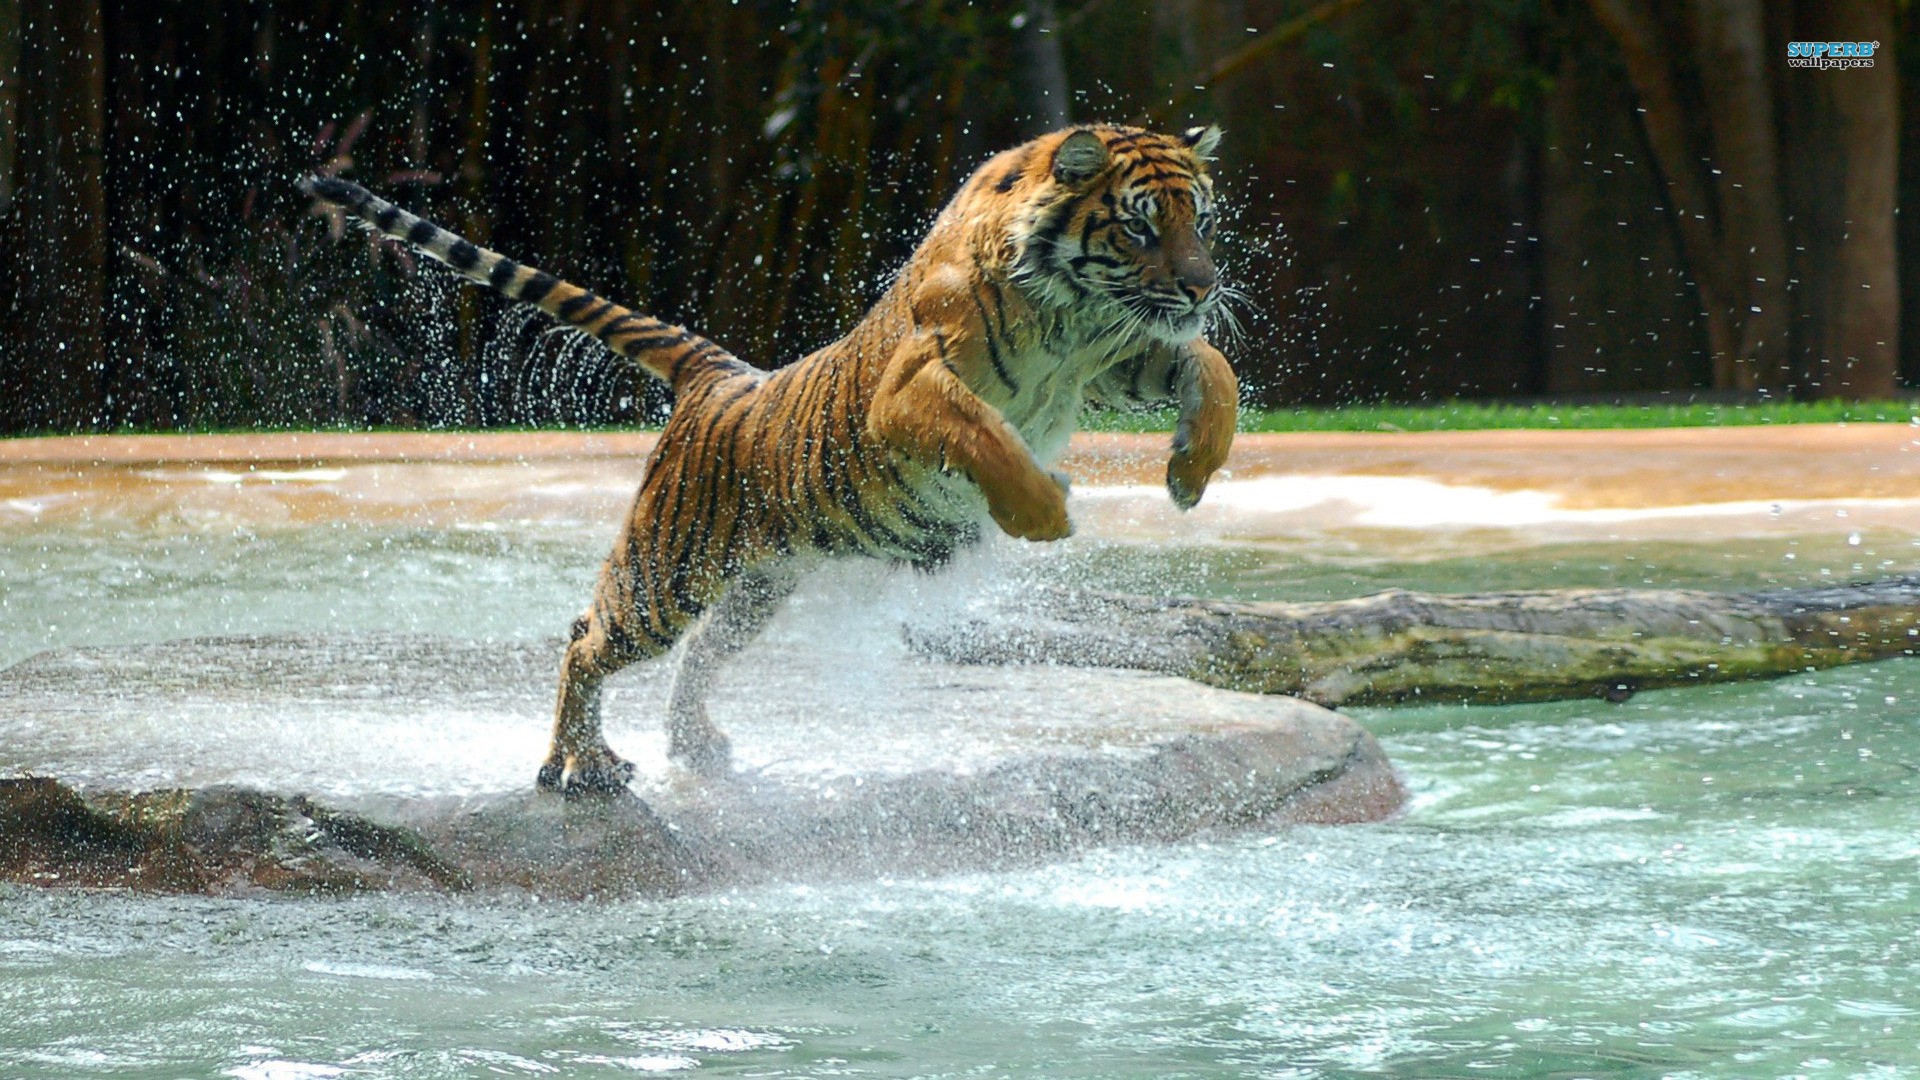 Tiger in Water Wallpaper